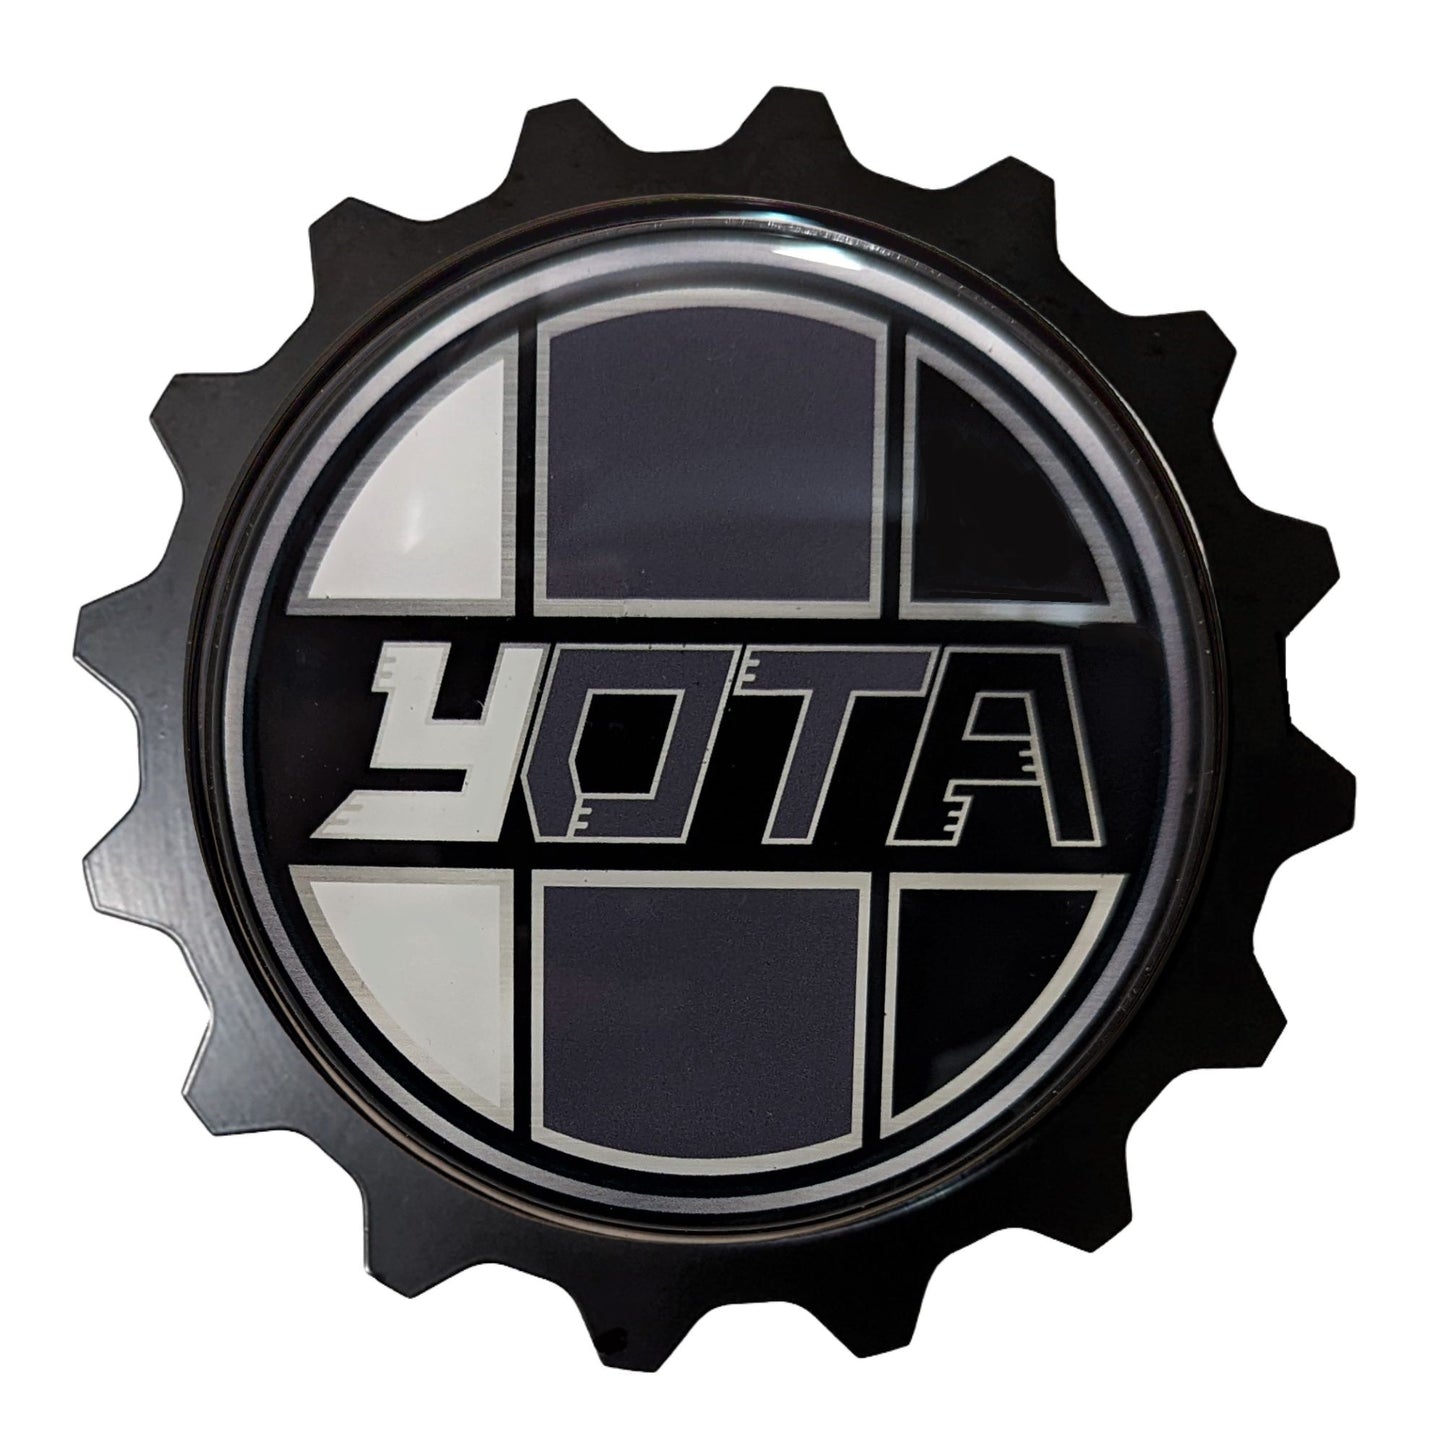 Toyota Tundra Blackout Emblem Overlay Grille Badge